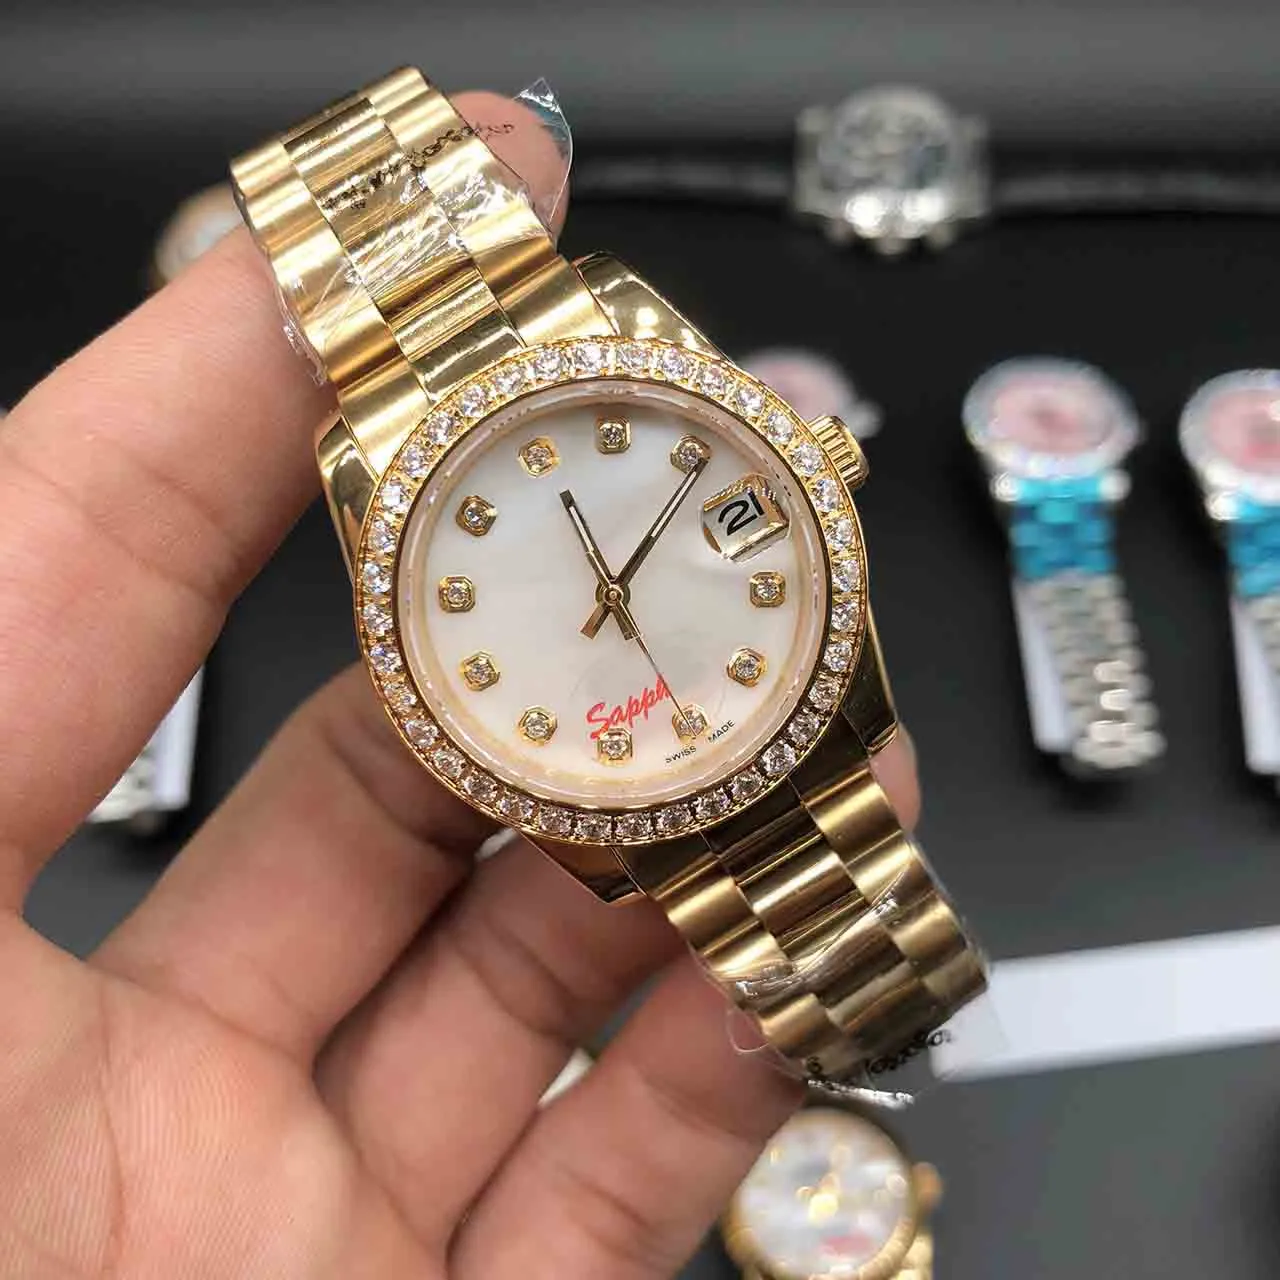 DateJust 시계 다이아몬드 마크 핑크 쉘 다이얼 여성 스테인리스 시계 여성 자동 손목 시계 발렌타인 선물 32mm211c